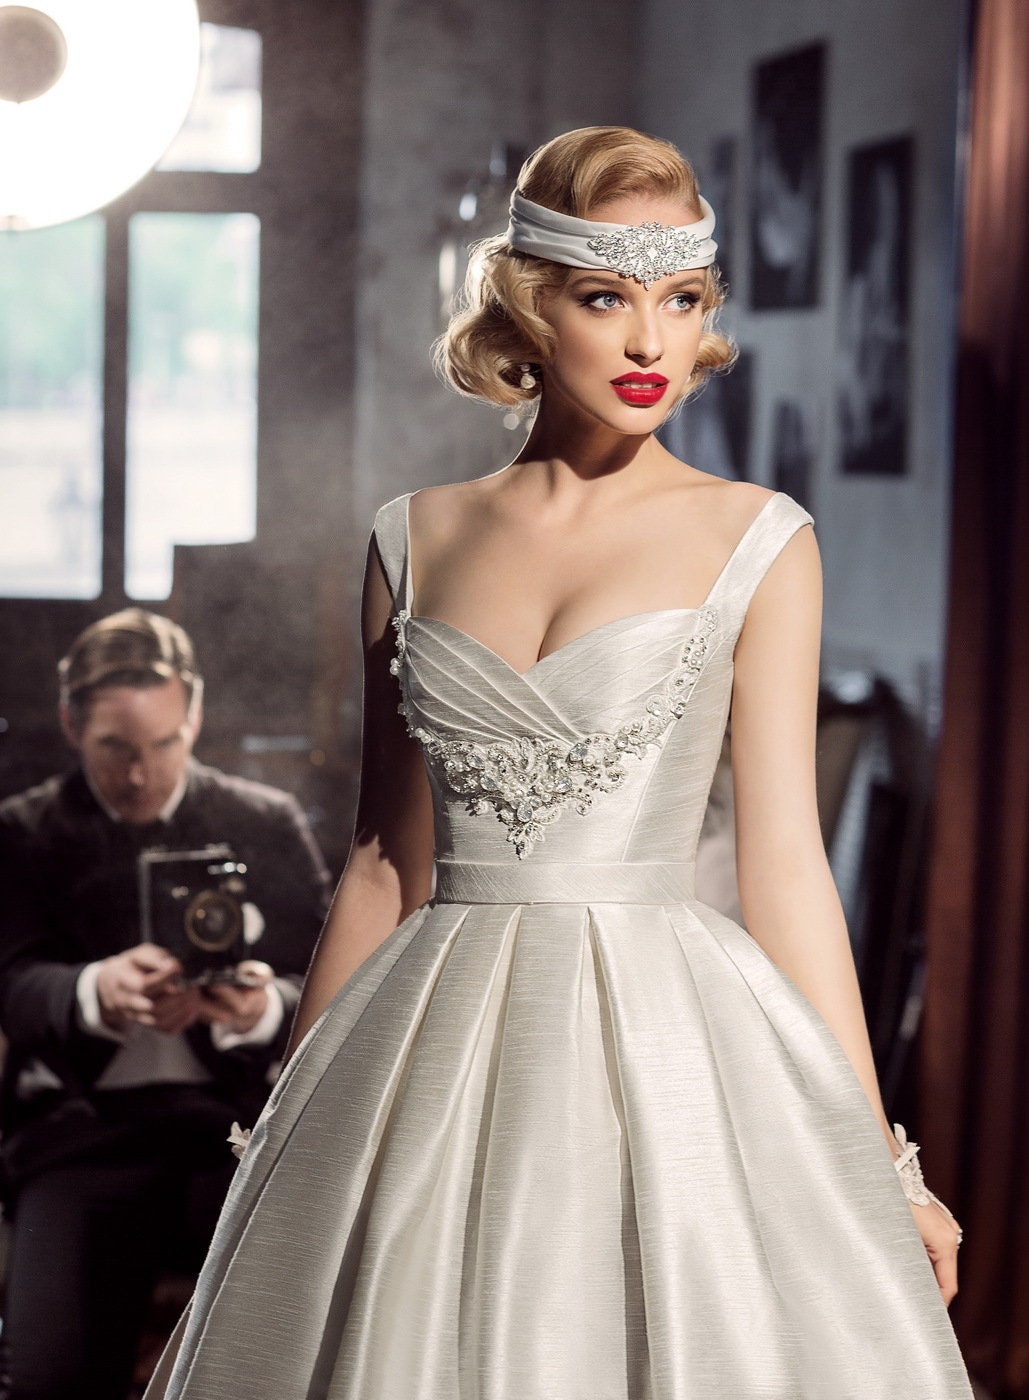 Classic Vintage Sleeveless Straps Sweetheart Shantung Wedding Dress Bridal Gown Full Skirt Train